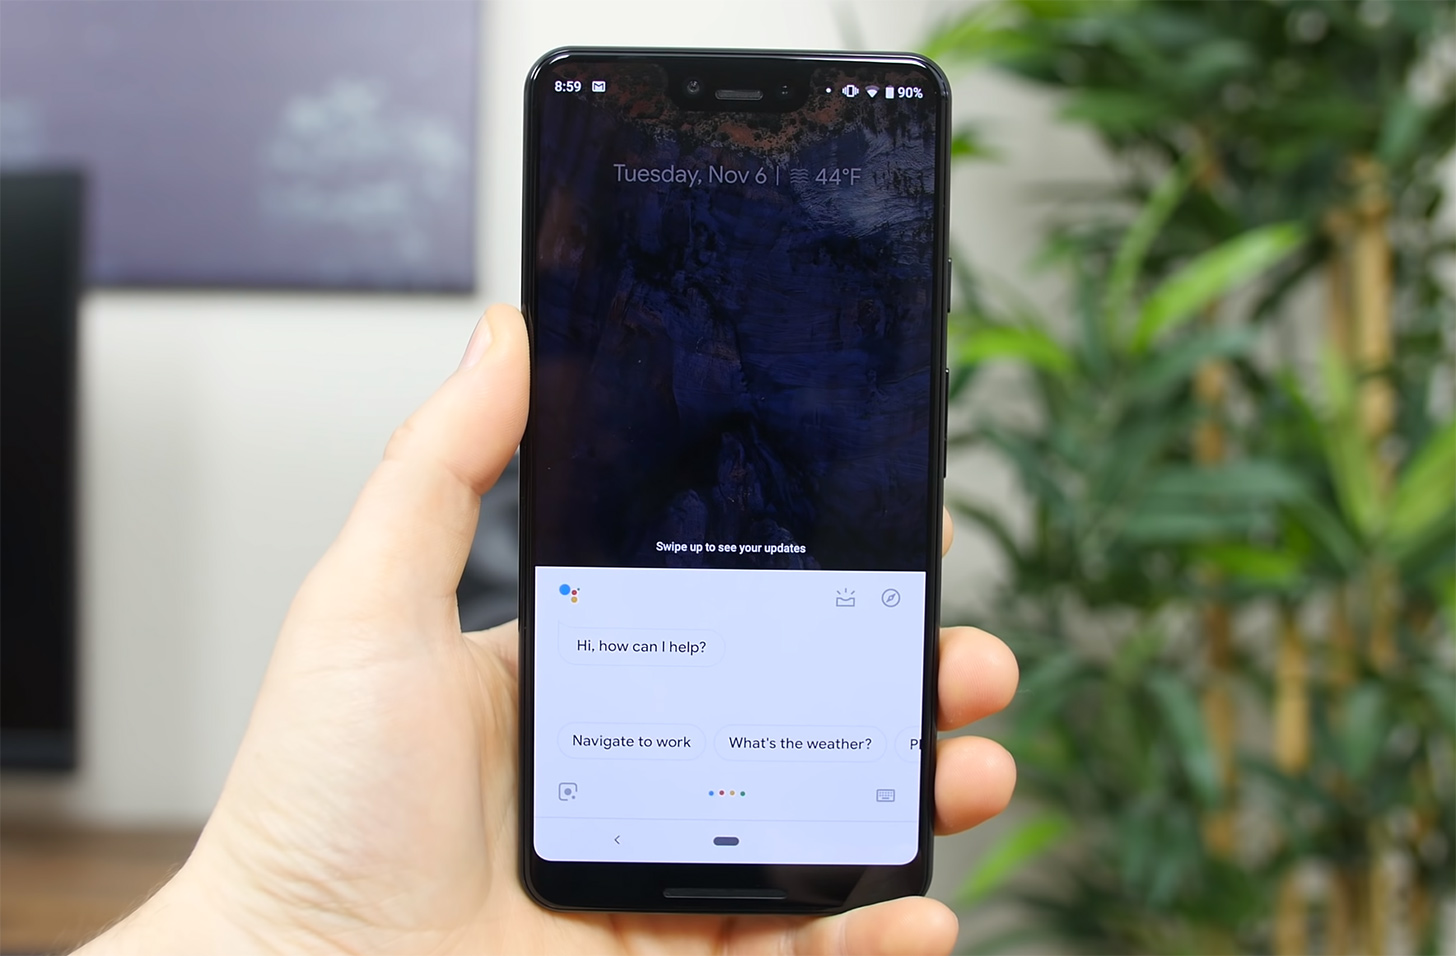 Google Assistant mendapatkan kemampuan untuk membaca dan membalas pesan dari aplikasi pihak ketiga